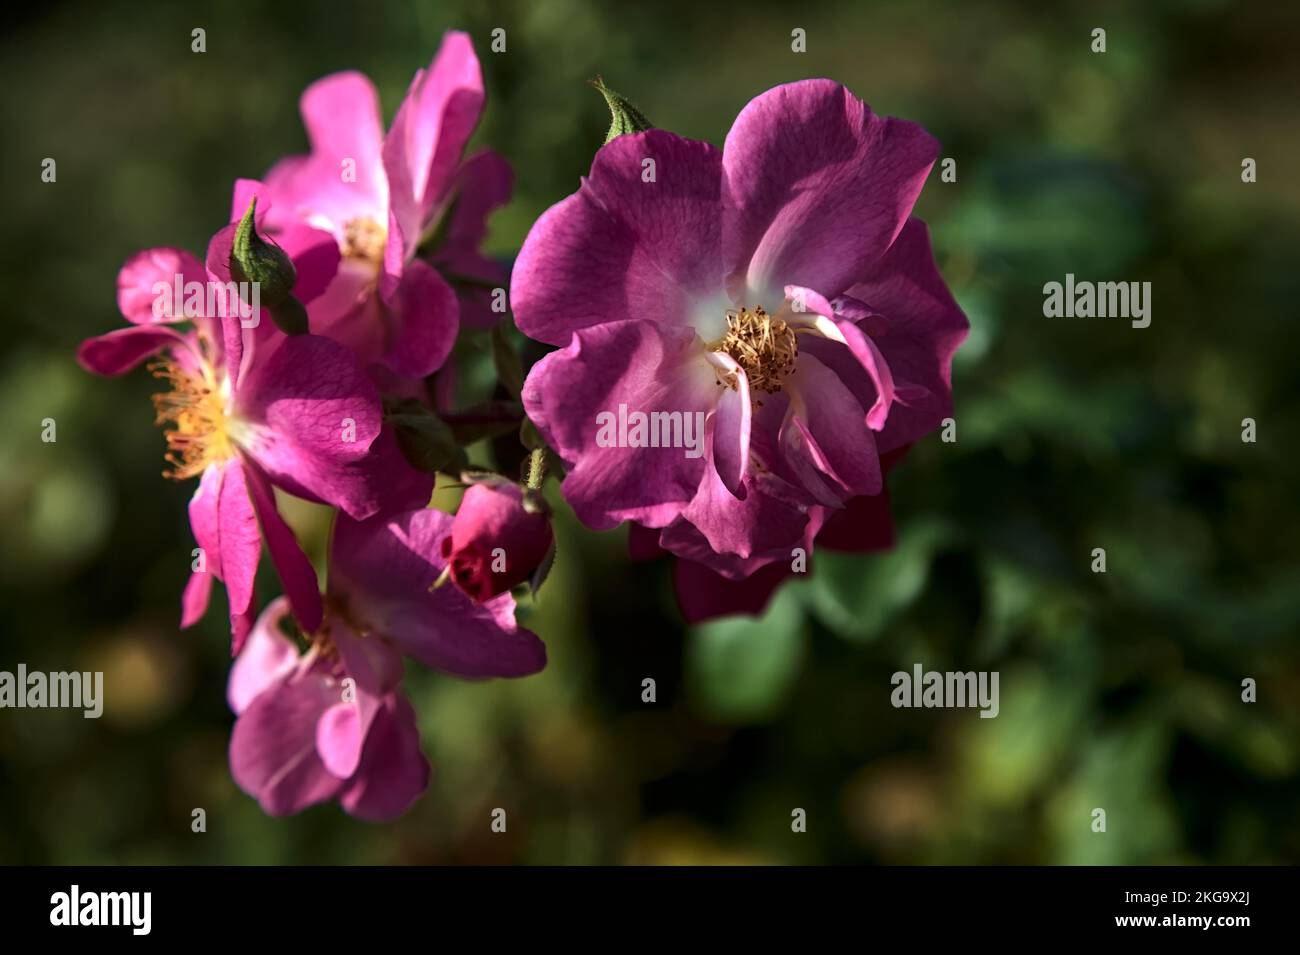 Purple  hybrid tea roses in bloom seen up close Stock Photo